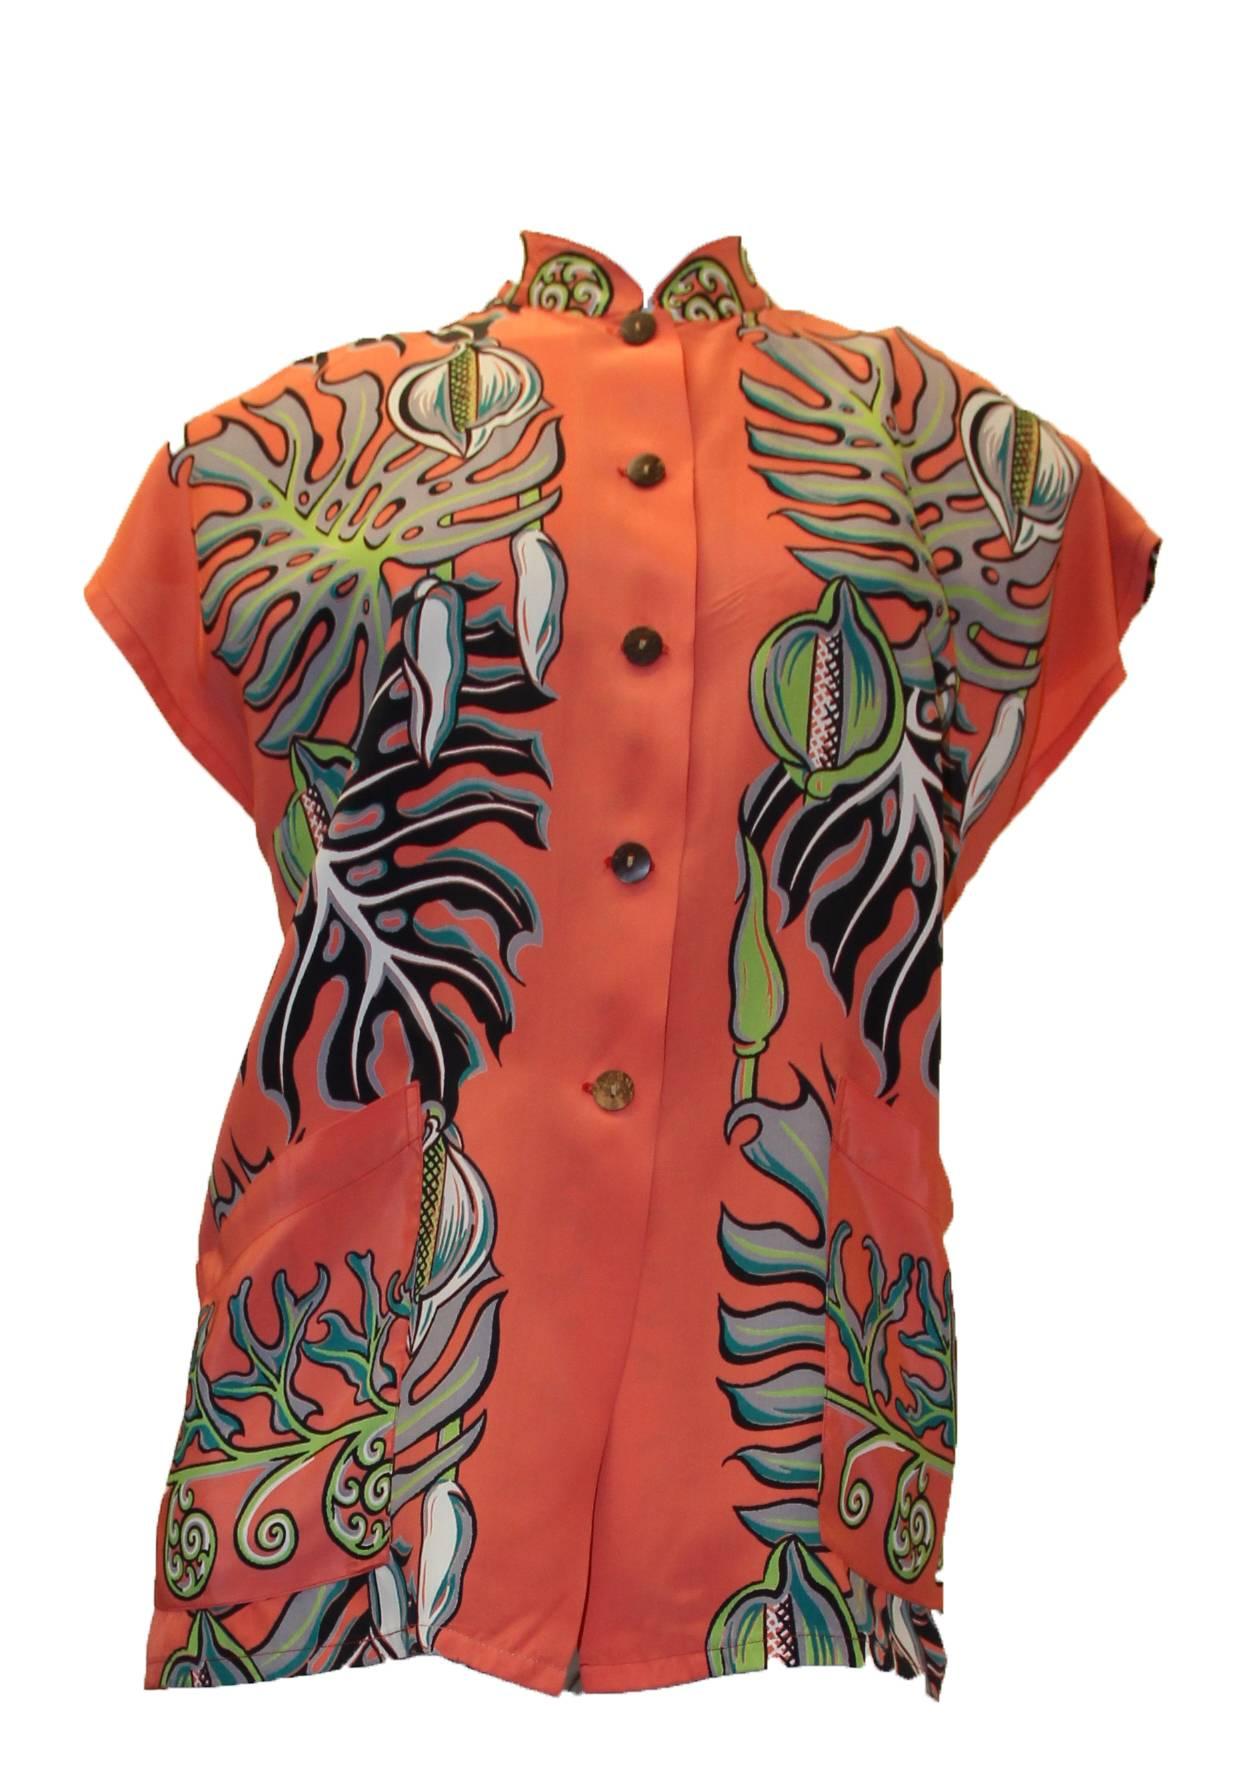 1950s Kamehameha rayon foliage print blouse. Center front button closure with coconut buttons.

Measurements:
Bust: 22